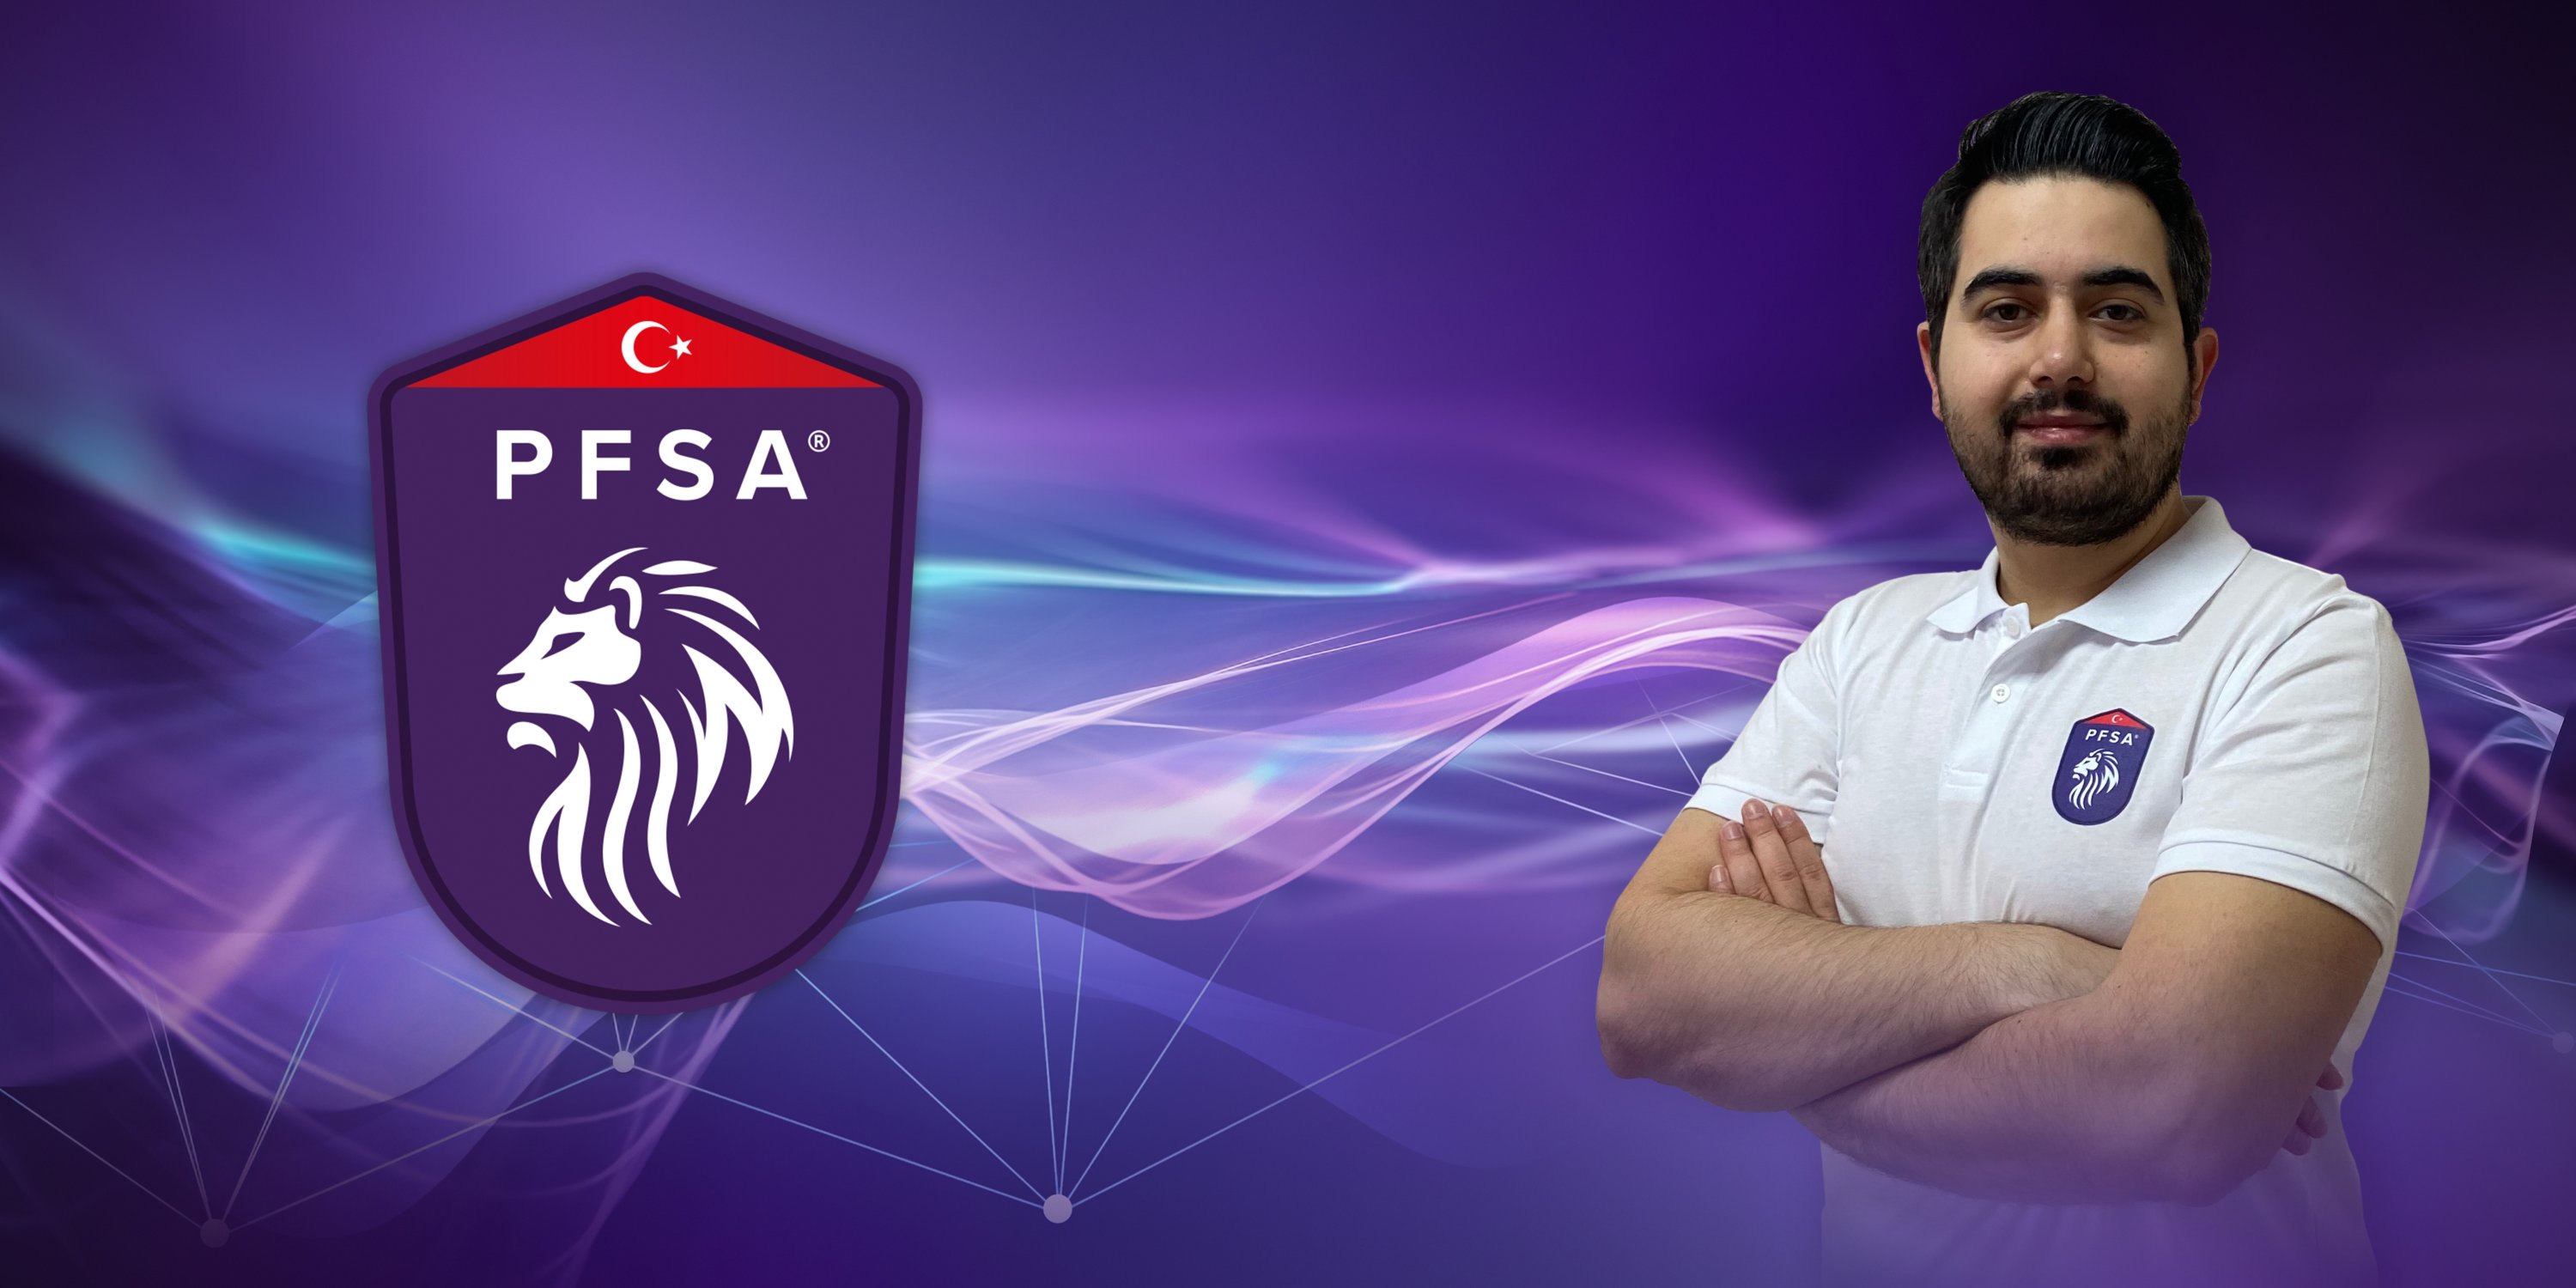 Direktur PFSA Türkiye Mert Tümöz di samping logo jaringan kepanduan.